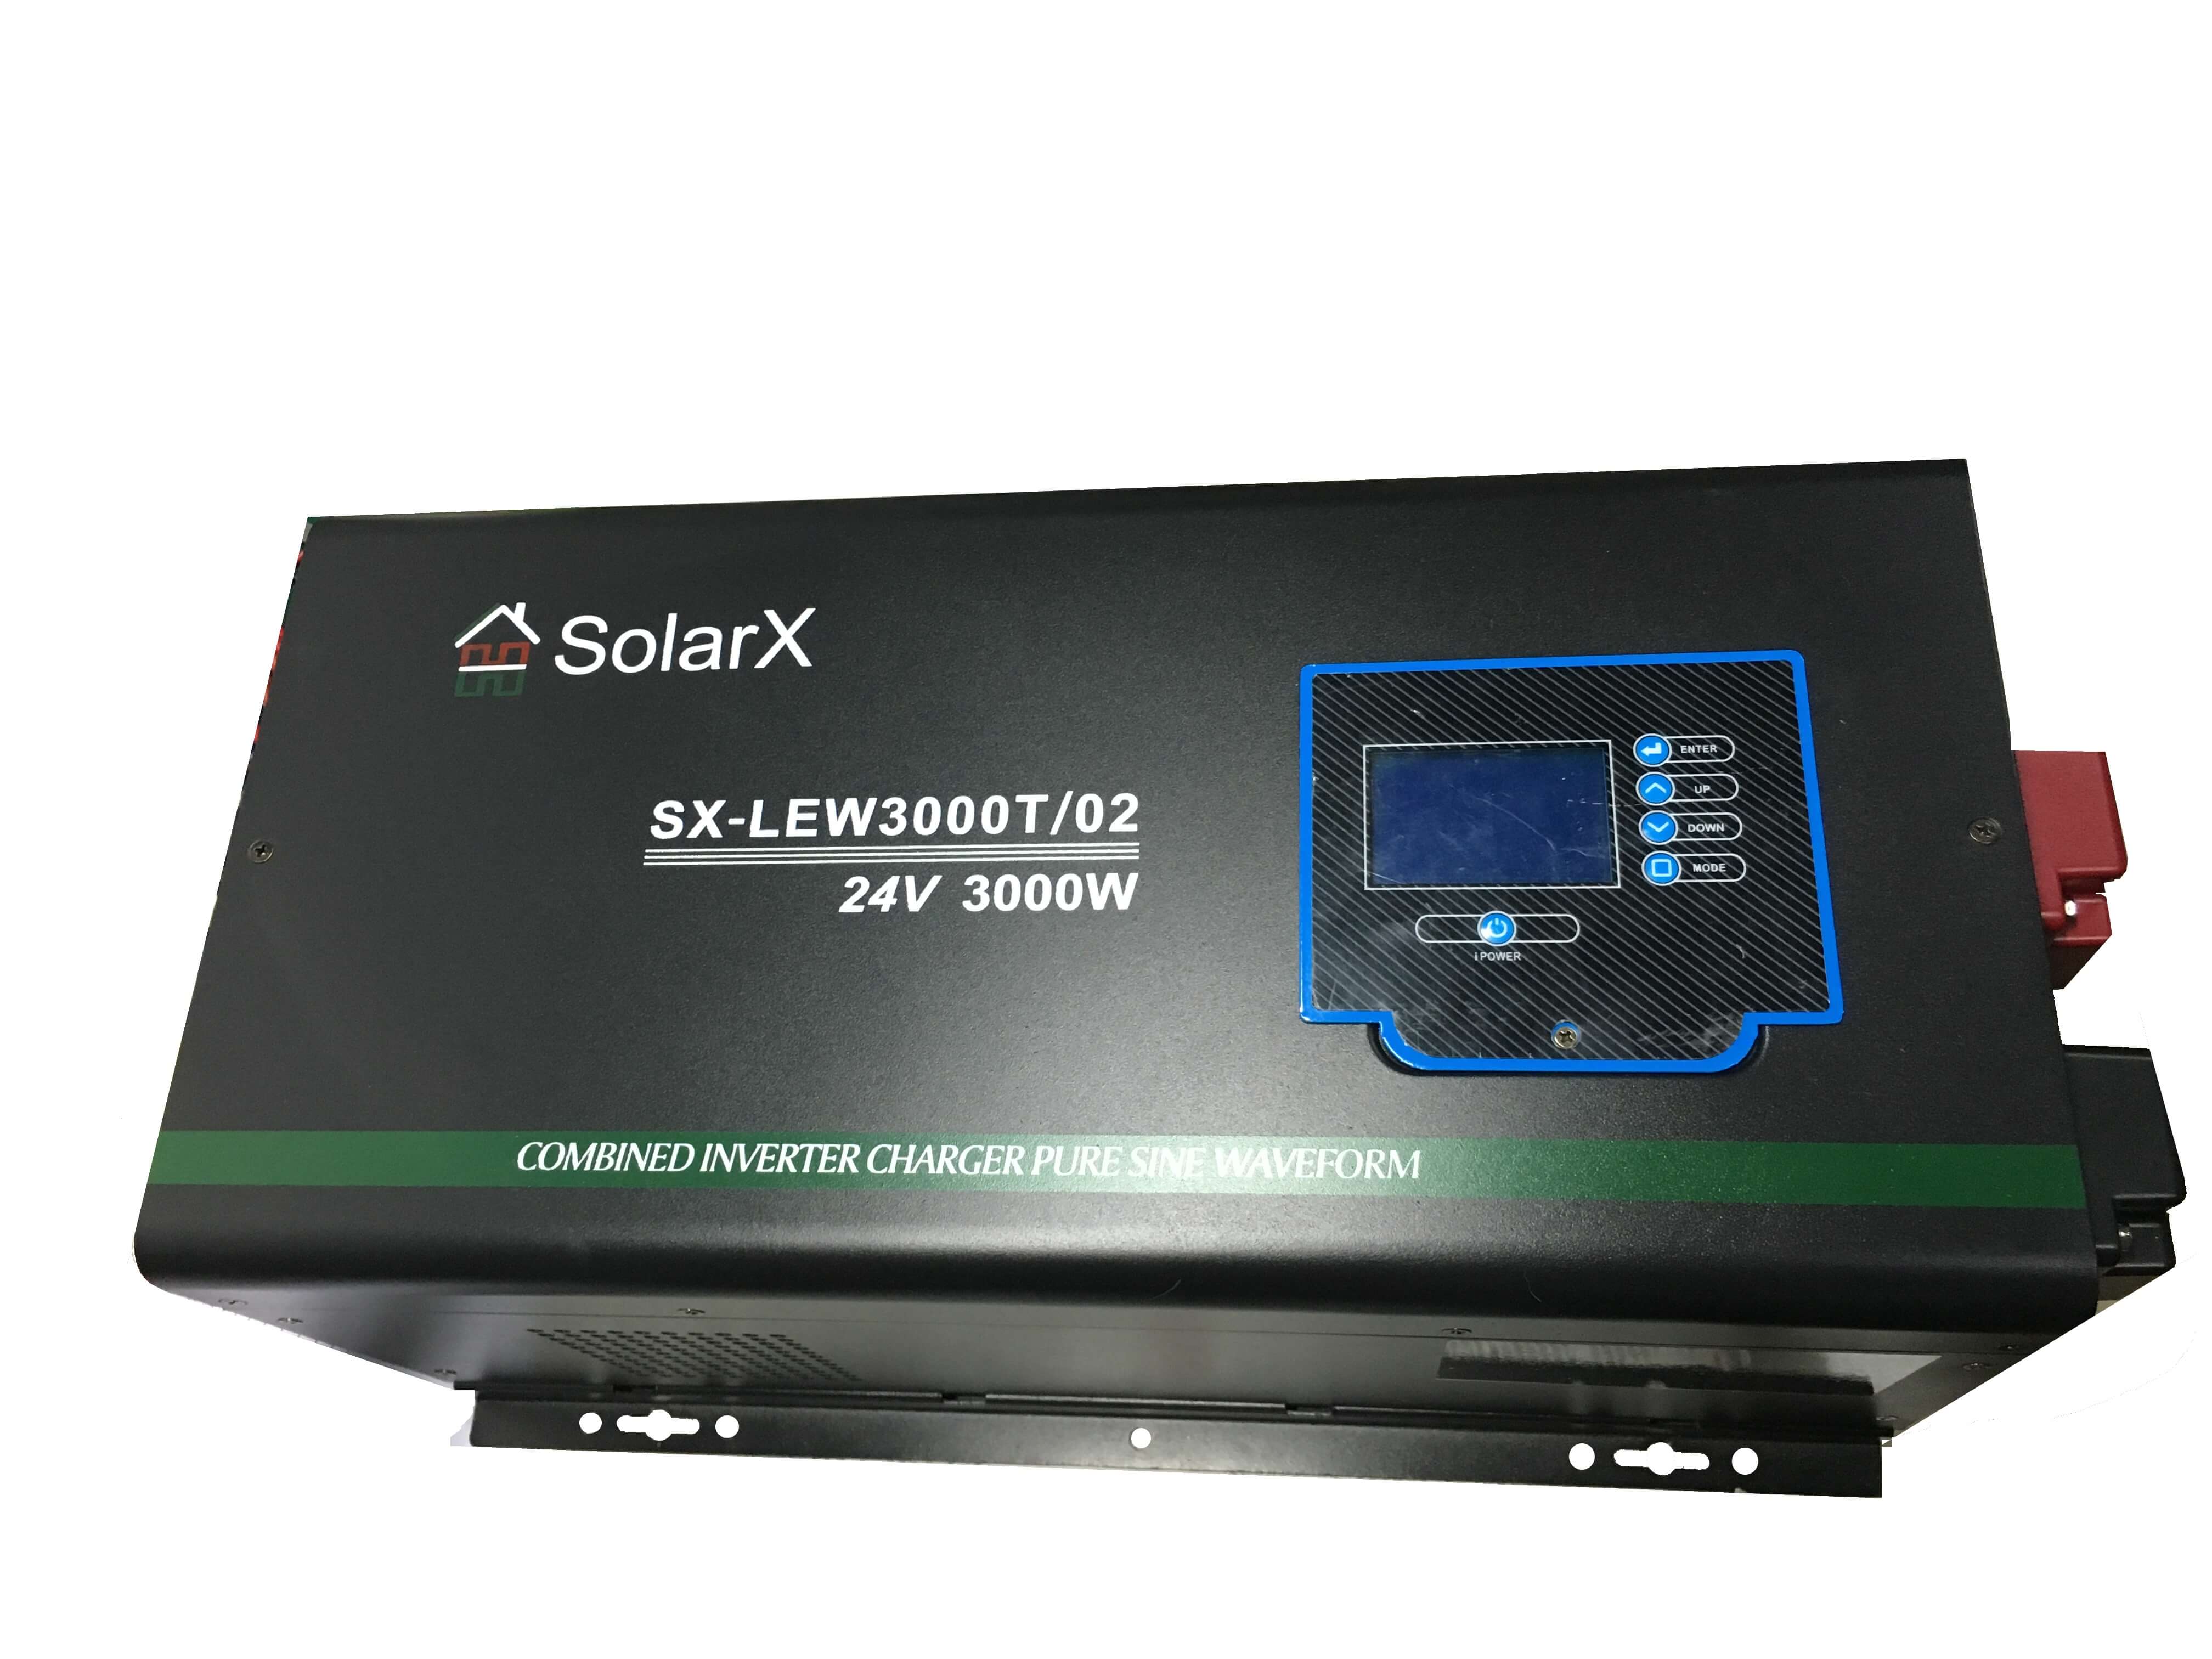 ИБП SolarX SX-LEW3000T/02 ᐉ купить артикул 0-167815 в Киеве - супер-цена на запчасть – от 12414 грн. – интернет-магазин Strument (Украина)